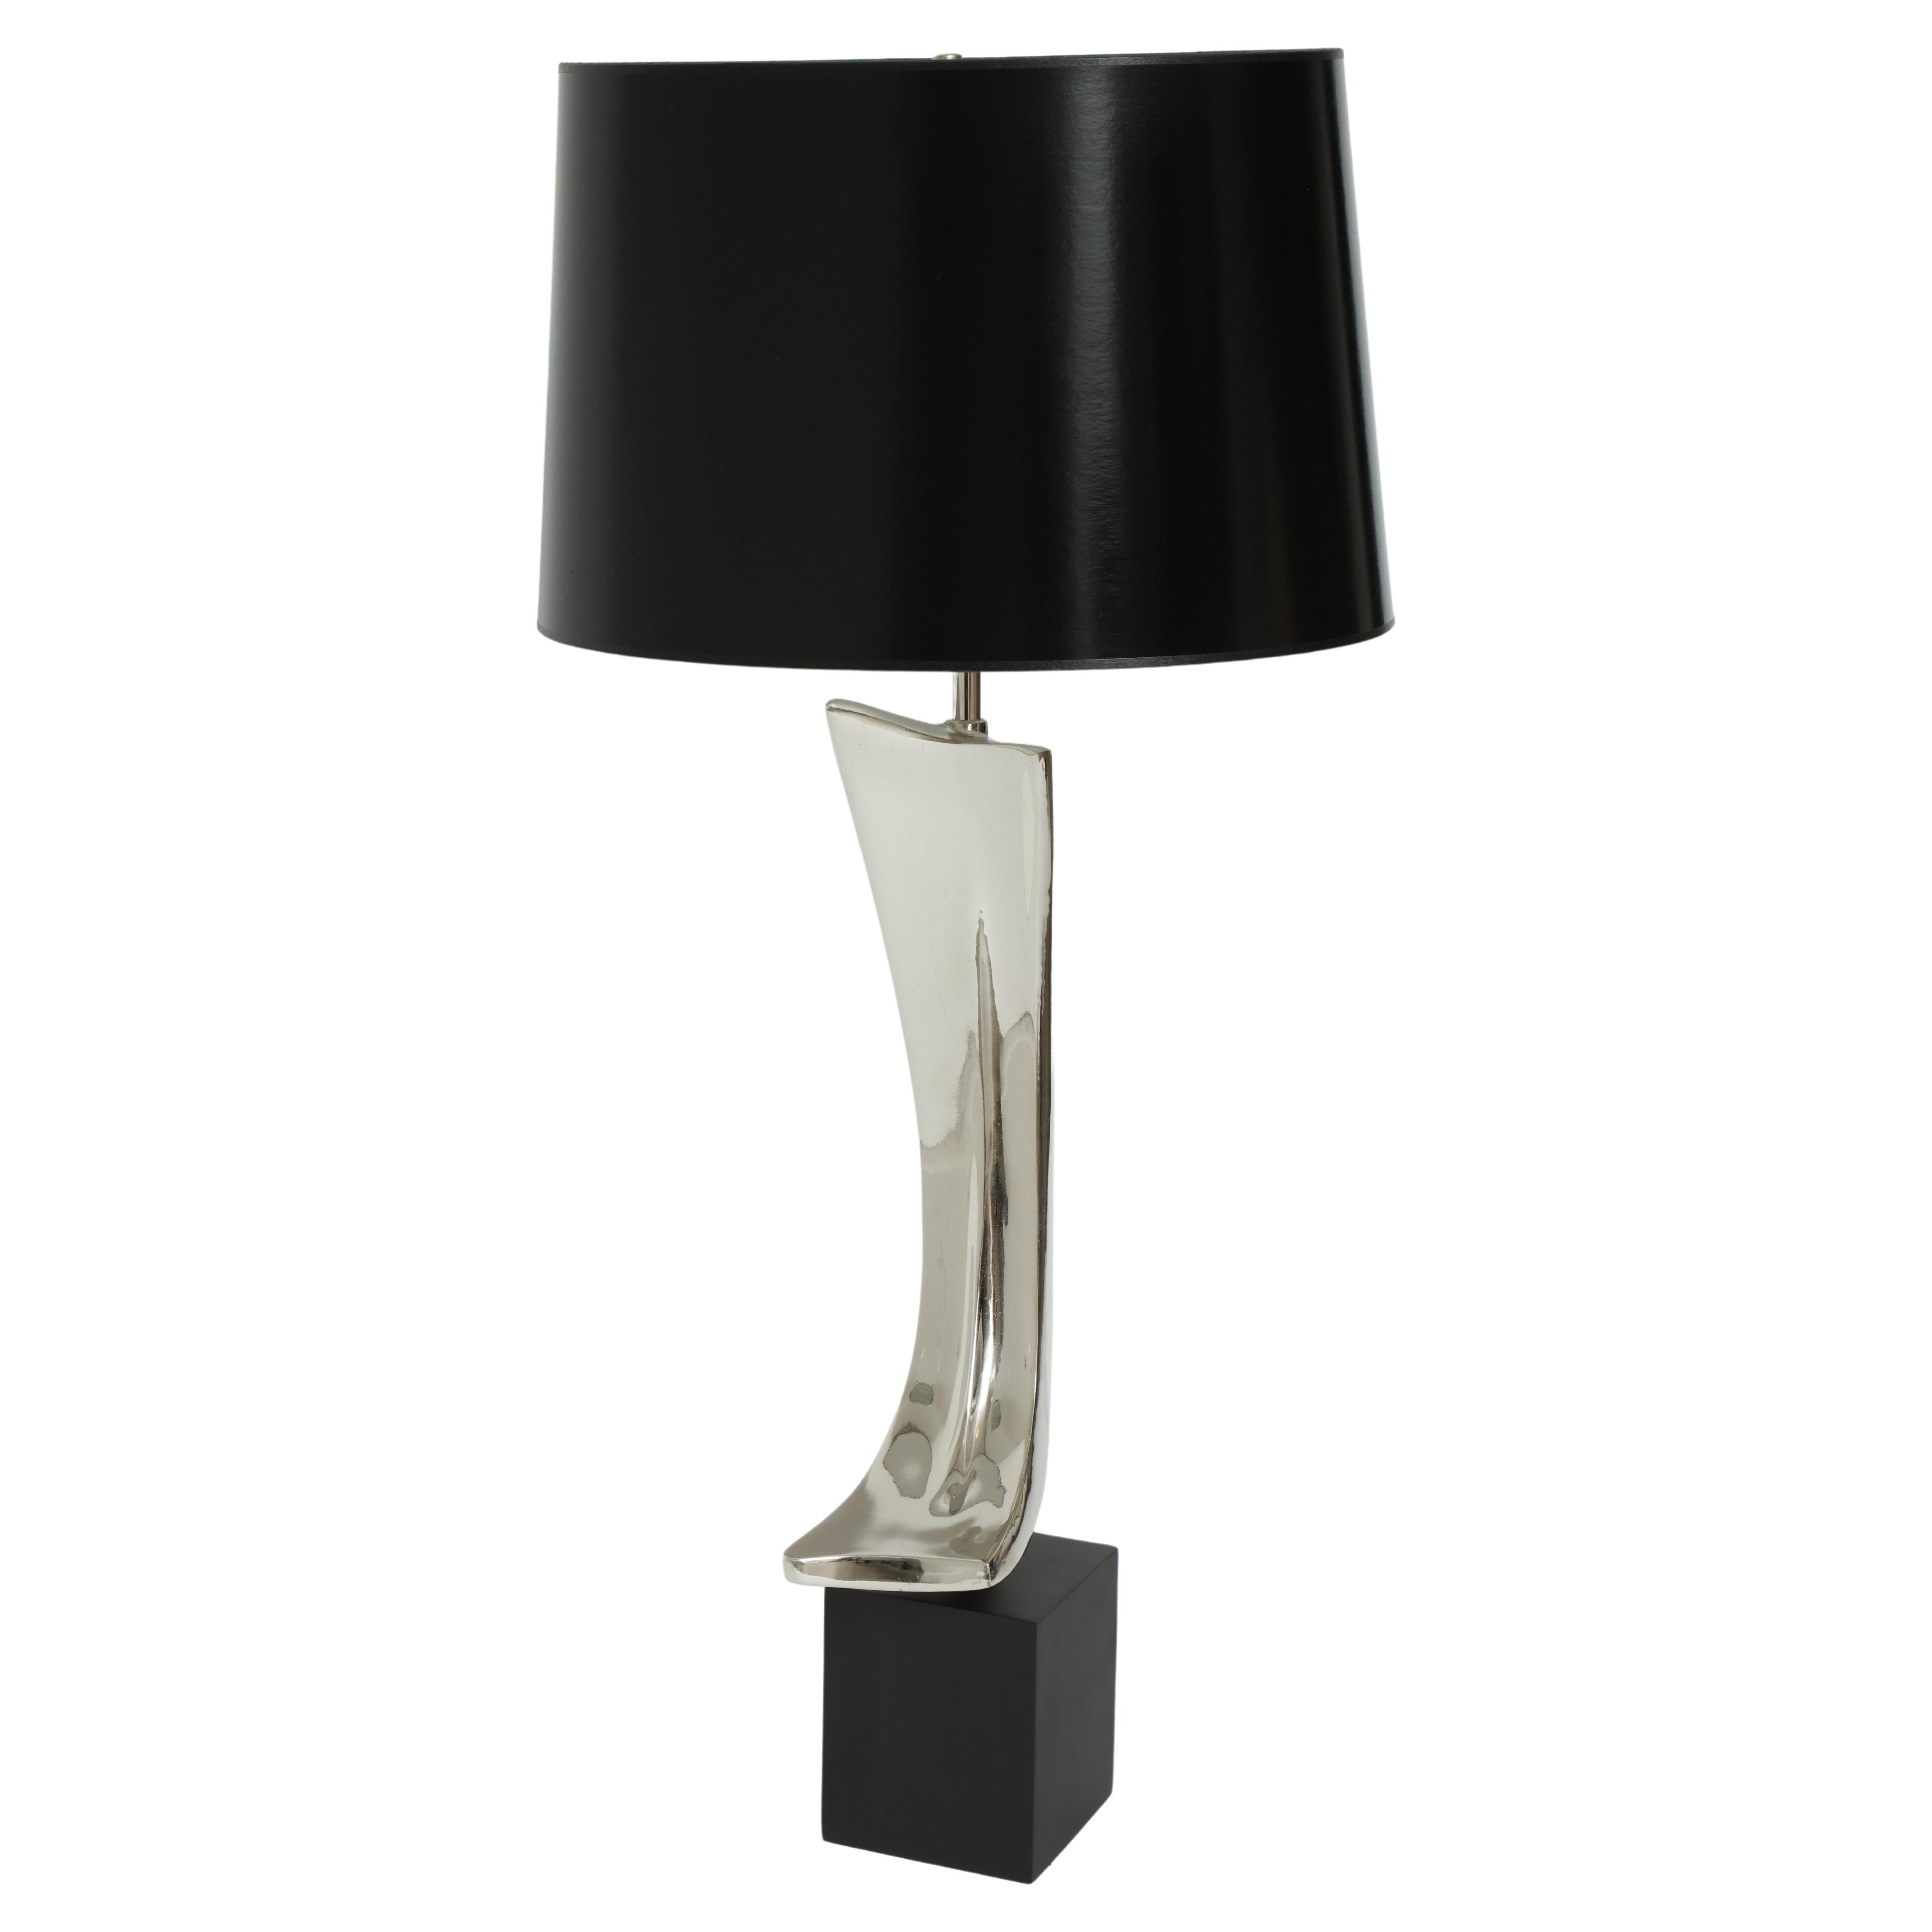 Lamp by Maurizio Tempestini, C 1950, Chrome, Single Lamp, No Lamp Shade Included